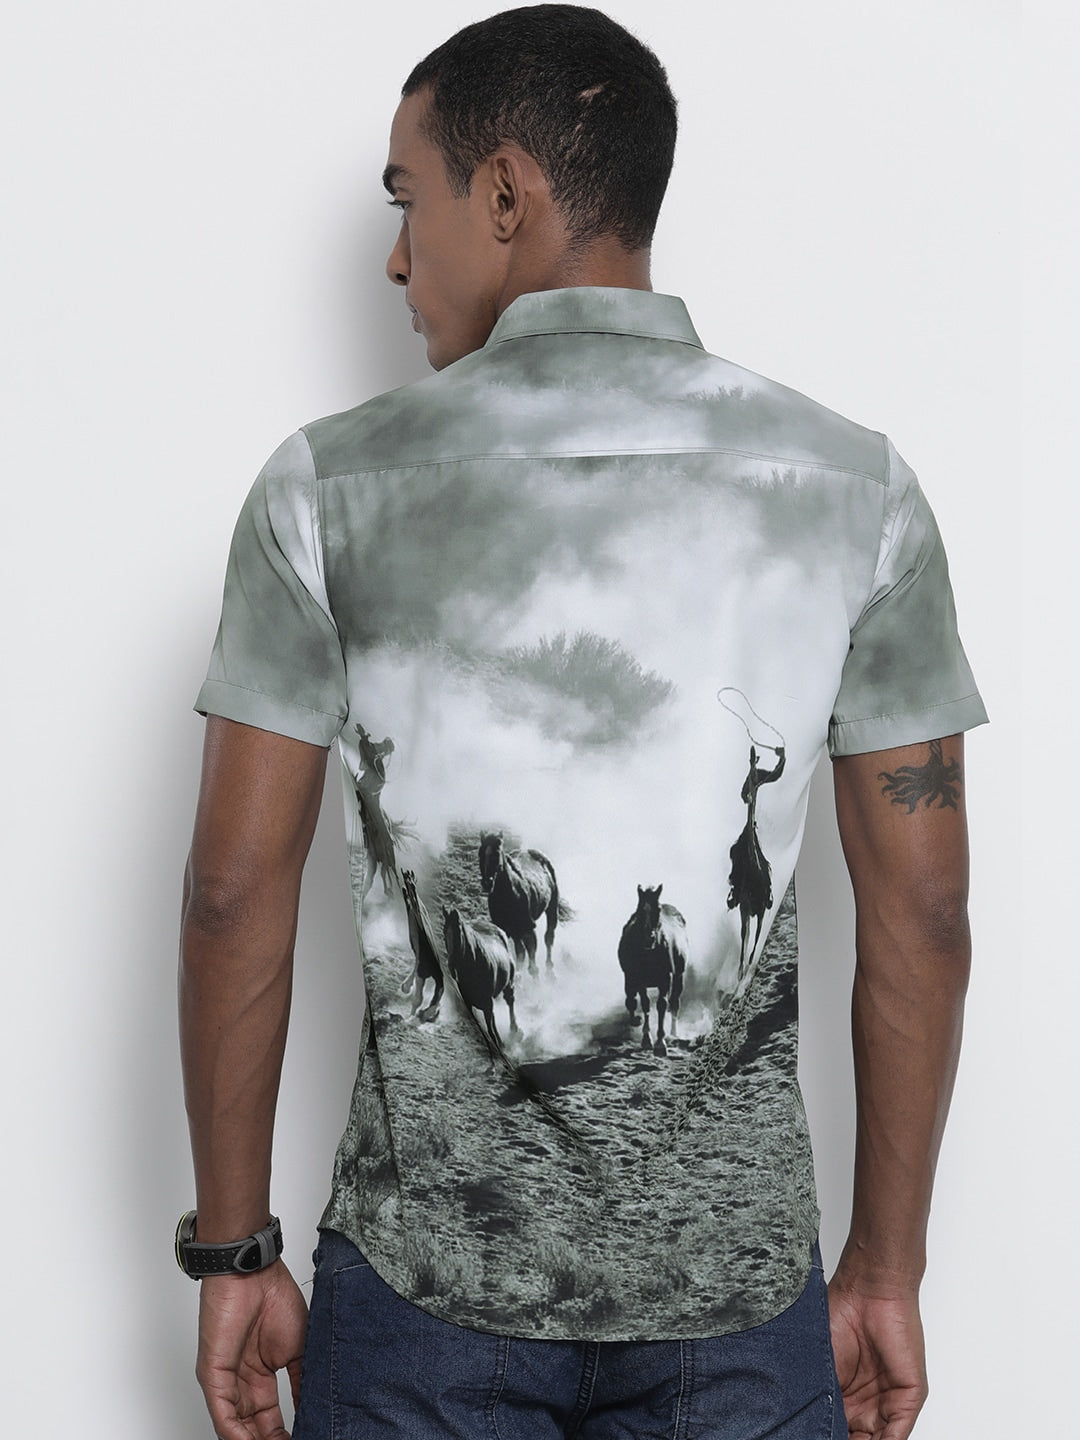 Shop Men Printed Shirt Online.